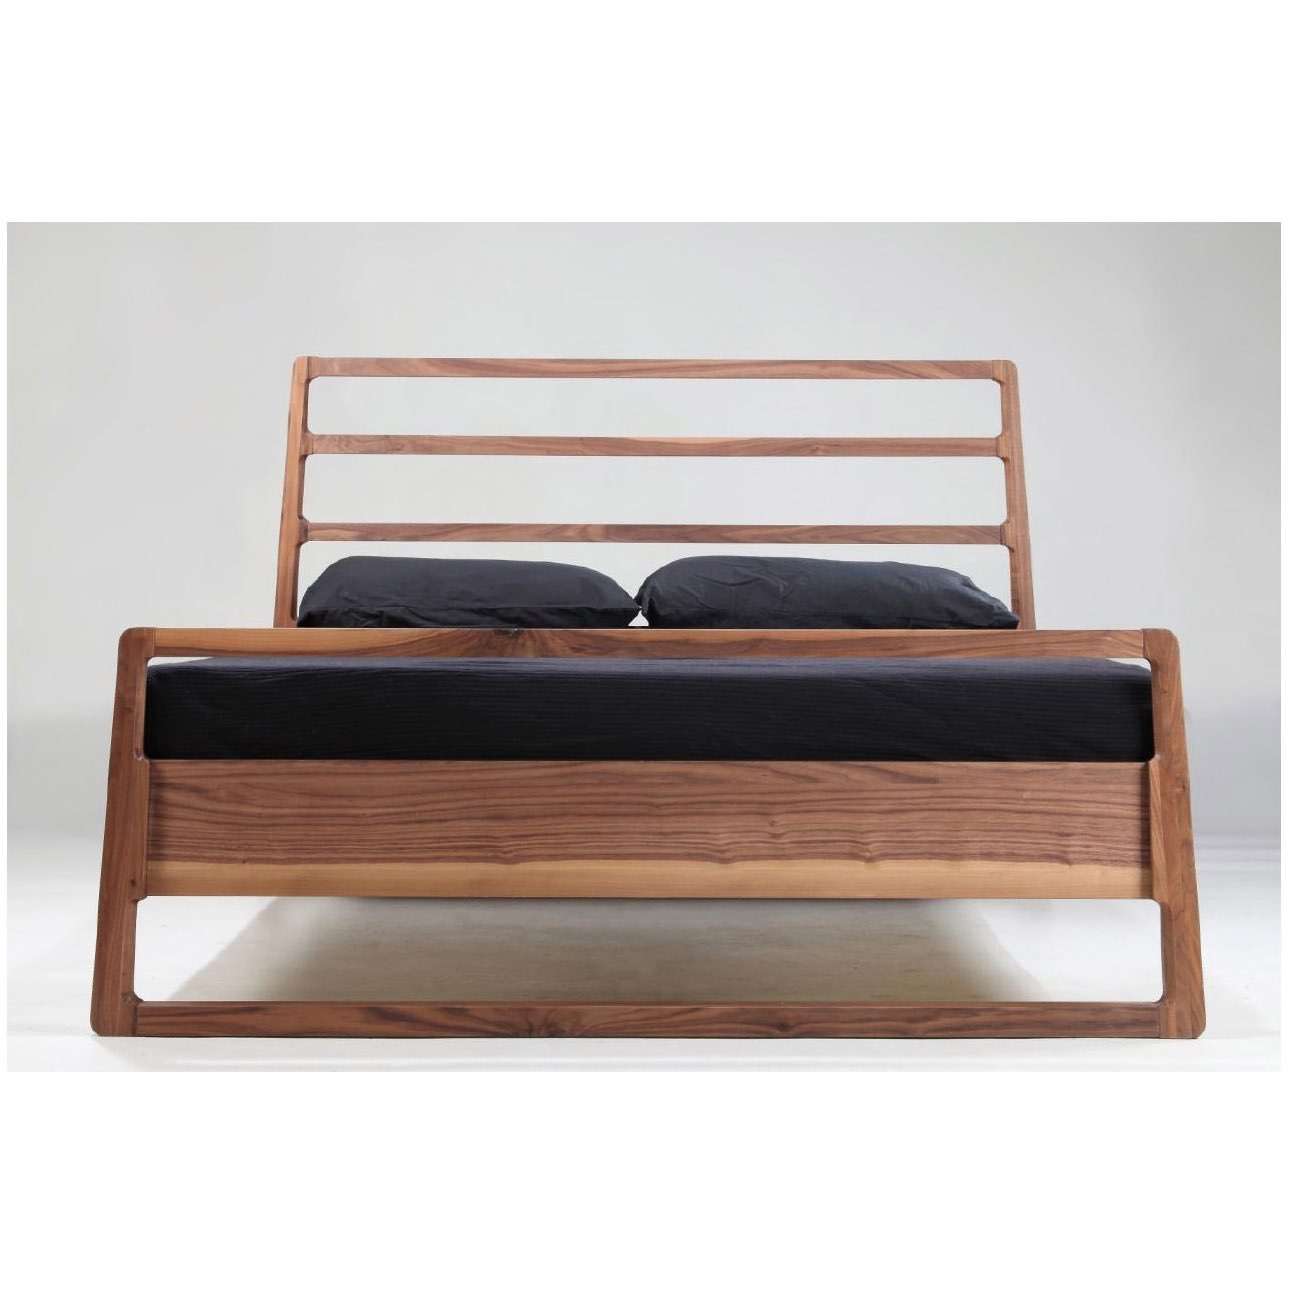 Solid wood bed|bedroom furniture|walnut bed